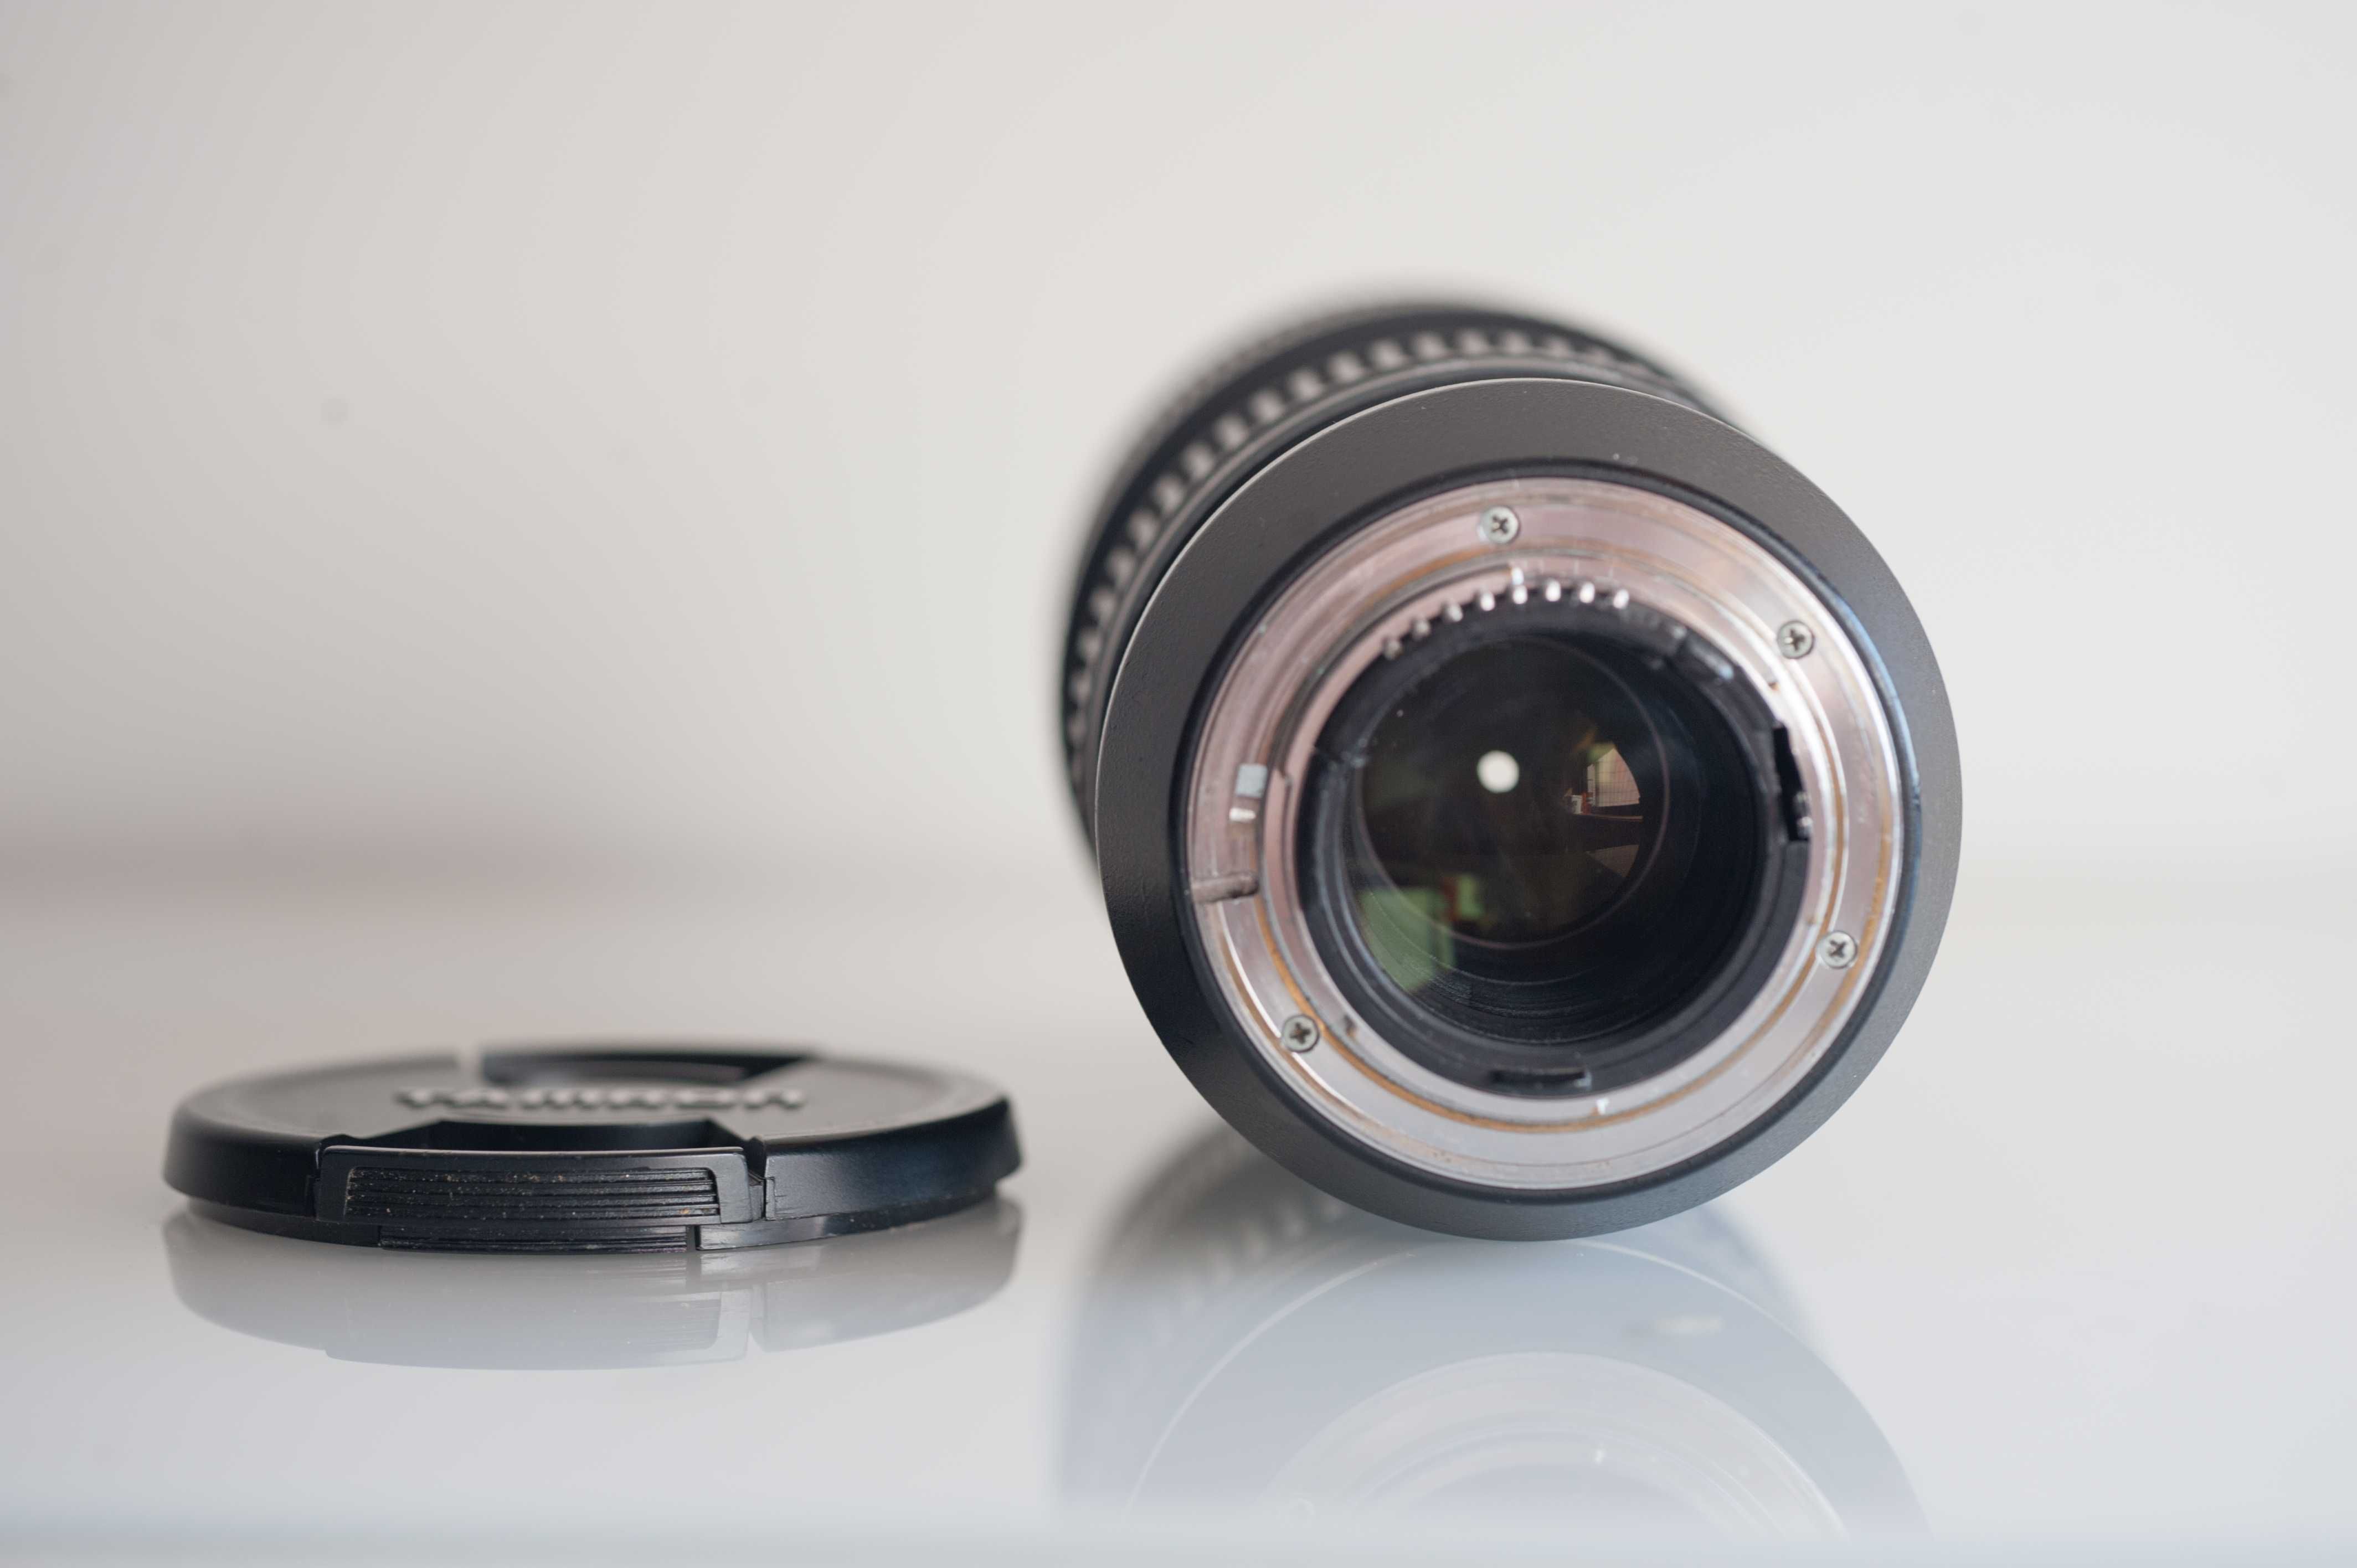 Tamron 70-200mm F2.8 lens, for Nikon cameras